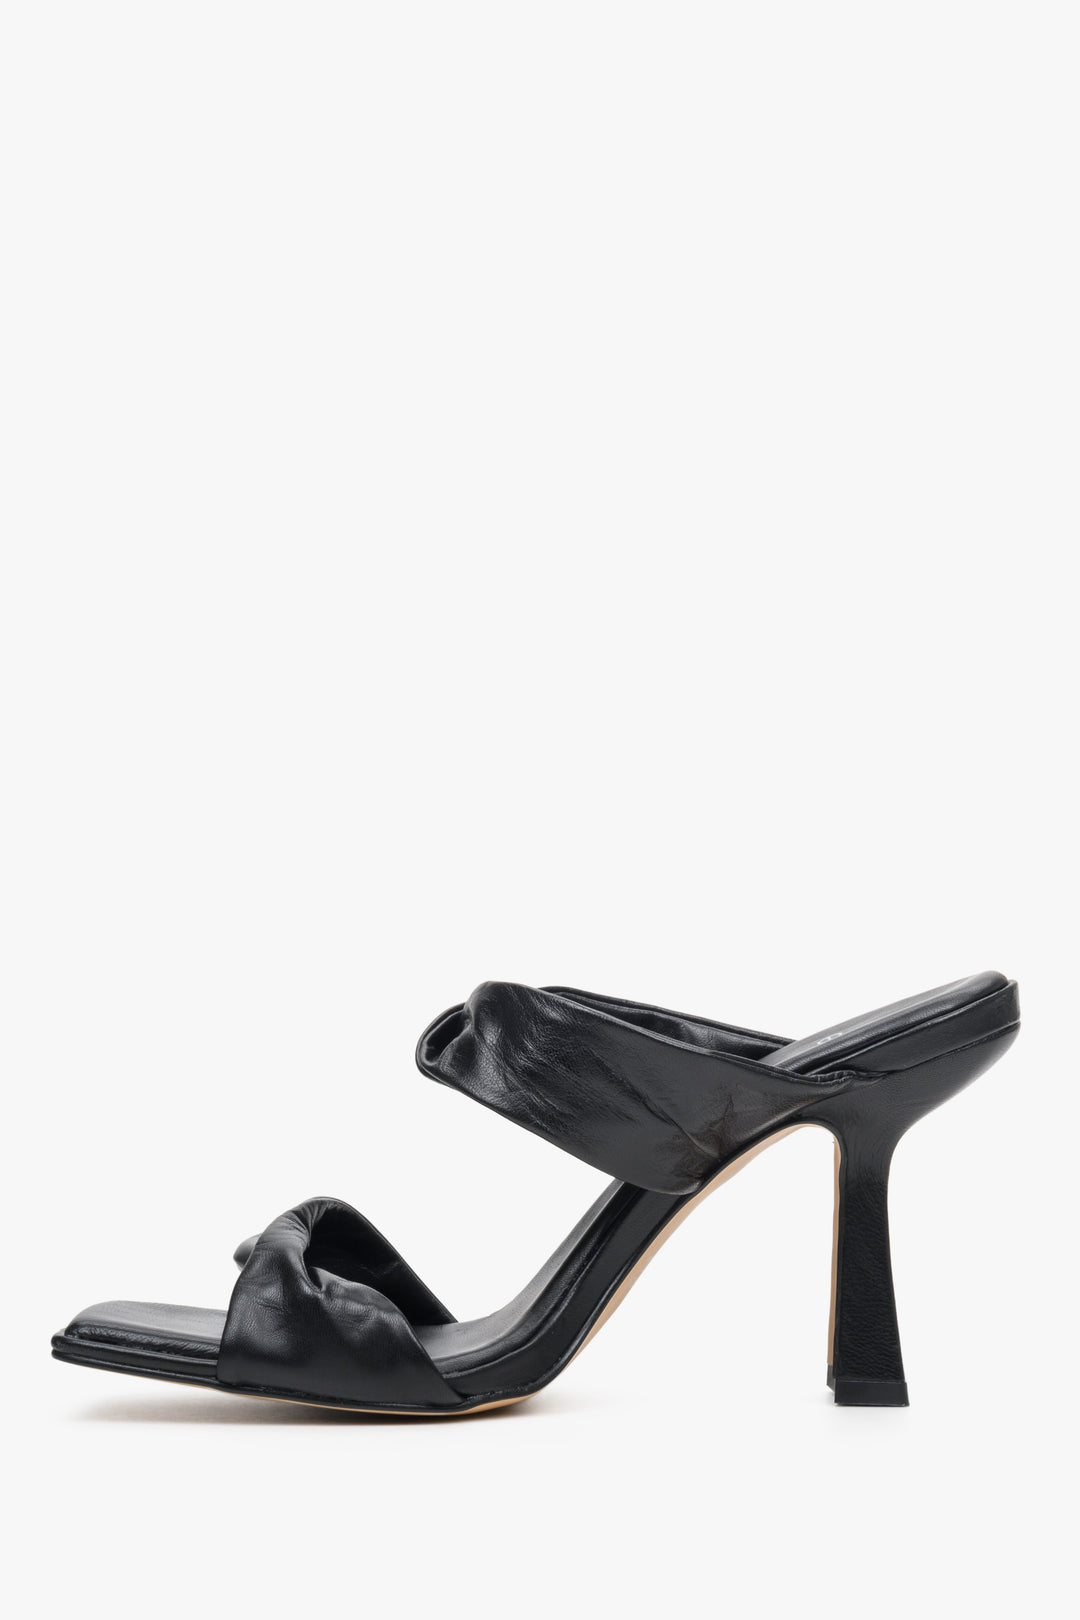 Leather, women's black sandals with woven straps by Estro - shoe profile.